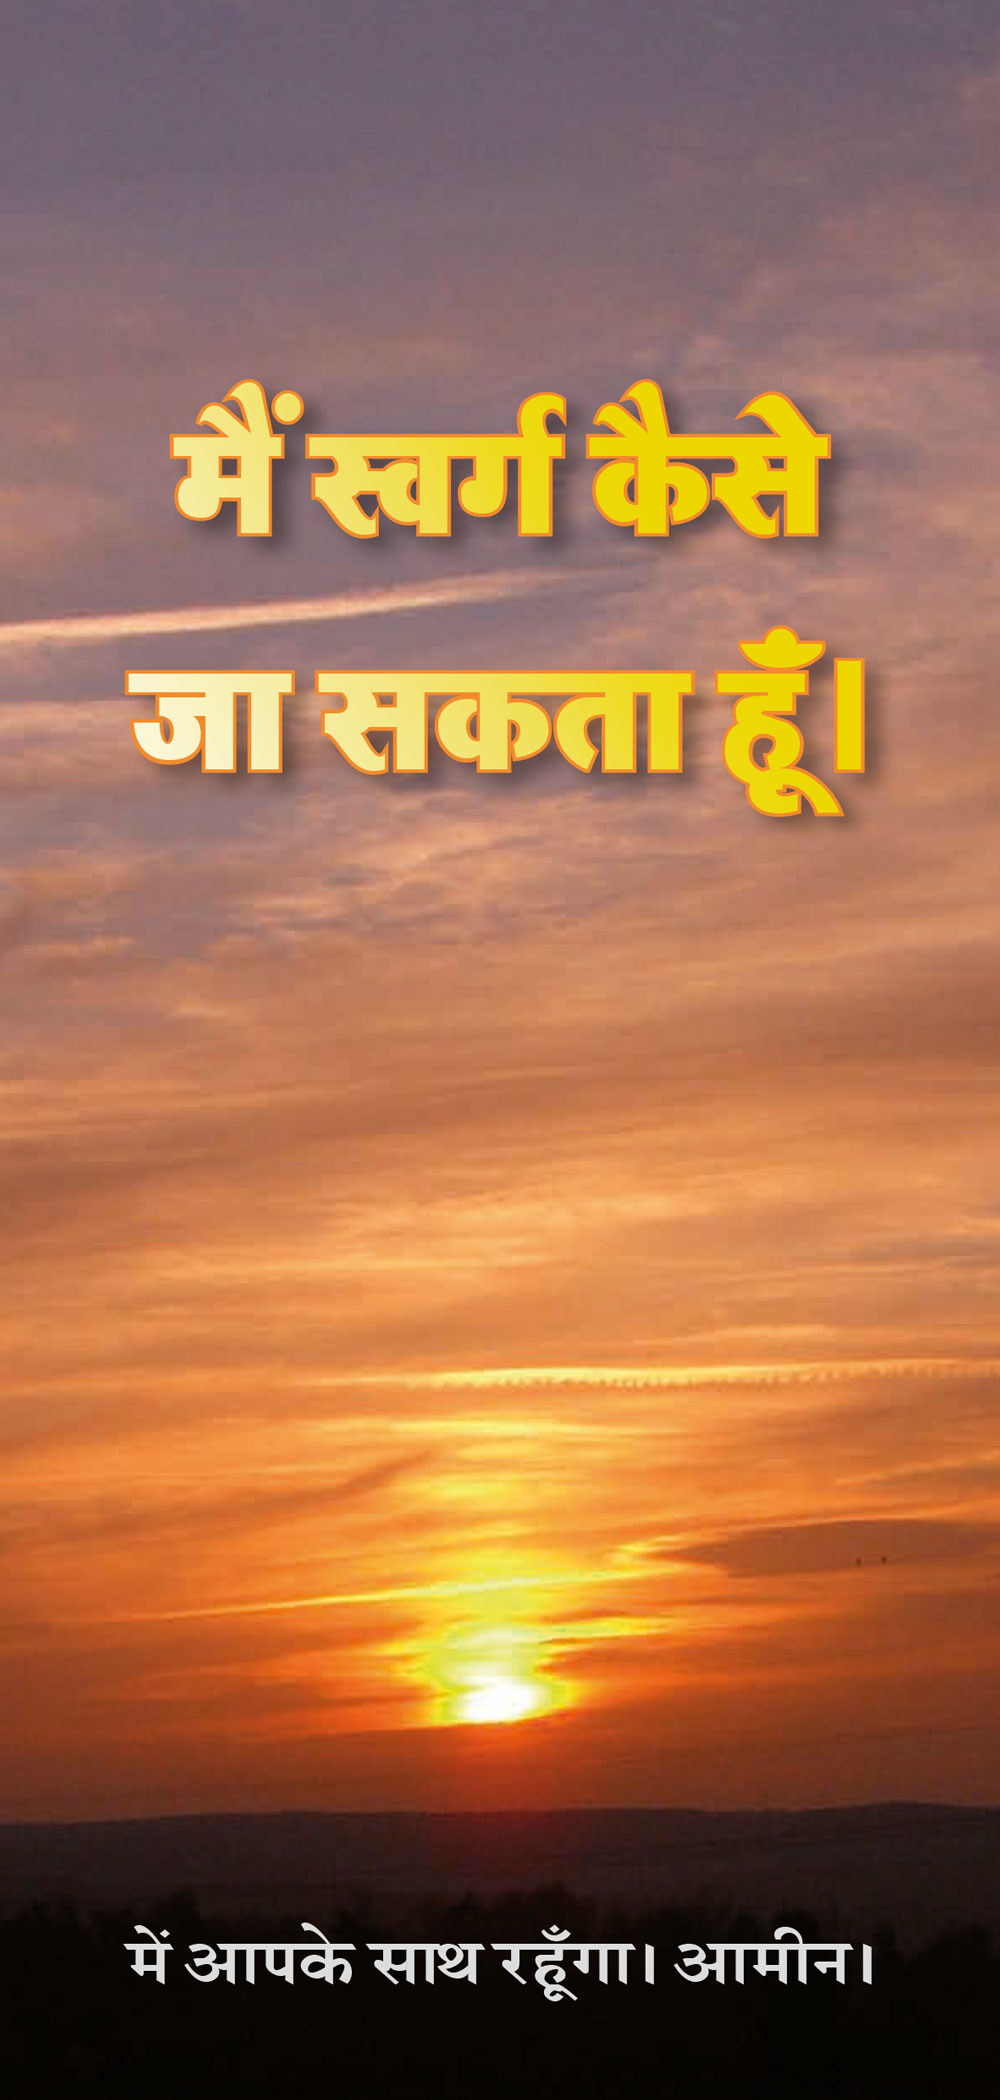 Hindi: Wie komme ich in den Himmel?